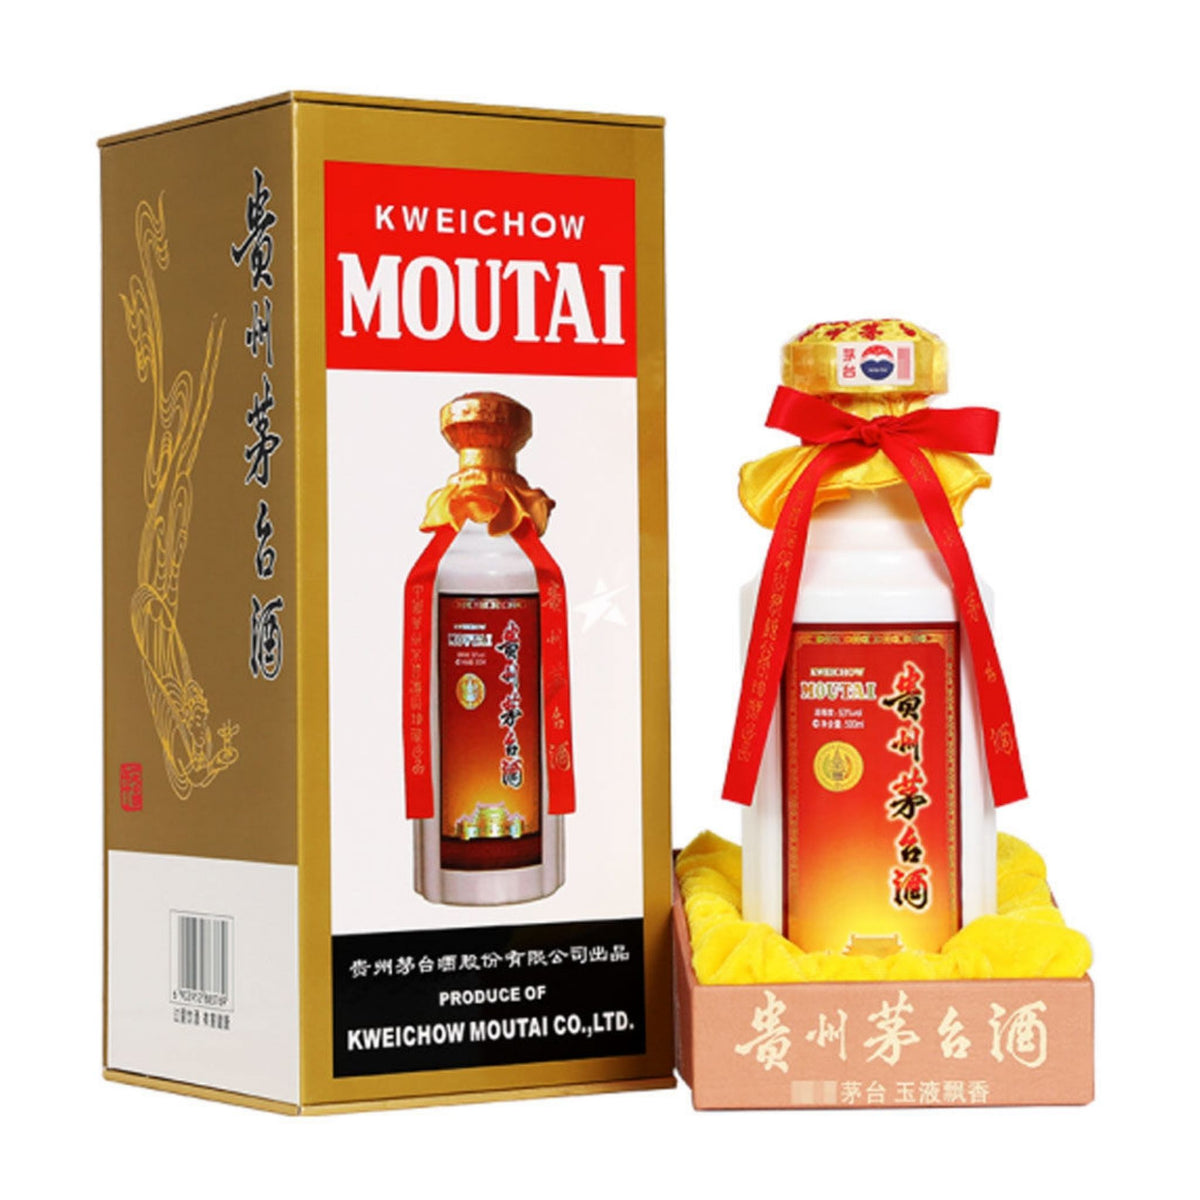 貴州茅台酒(豪華金色)53度- Moutai Luxury Gold Gift Set, Kweichow 